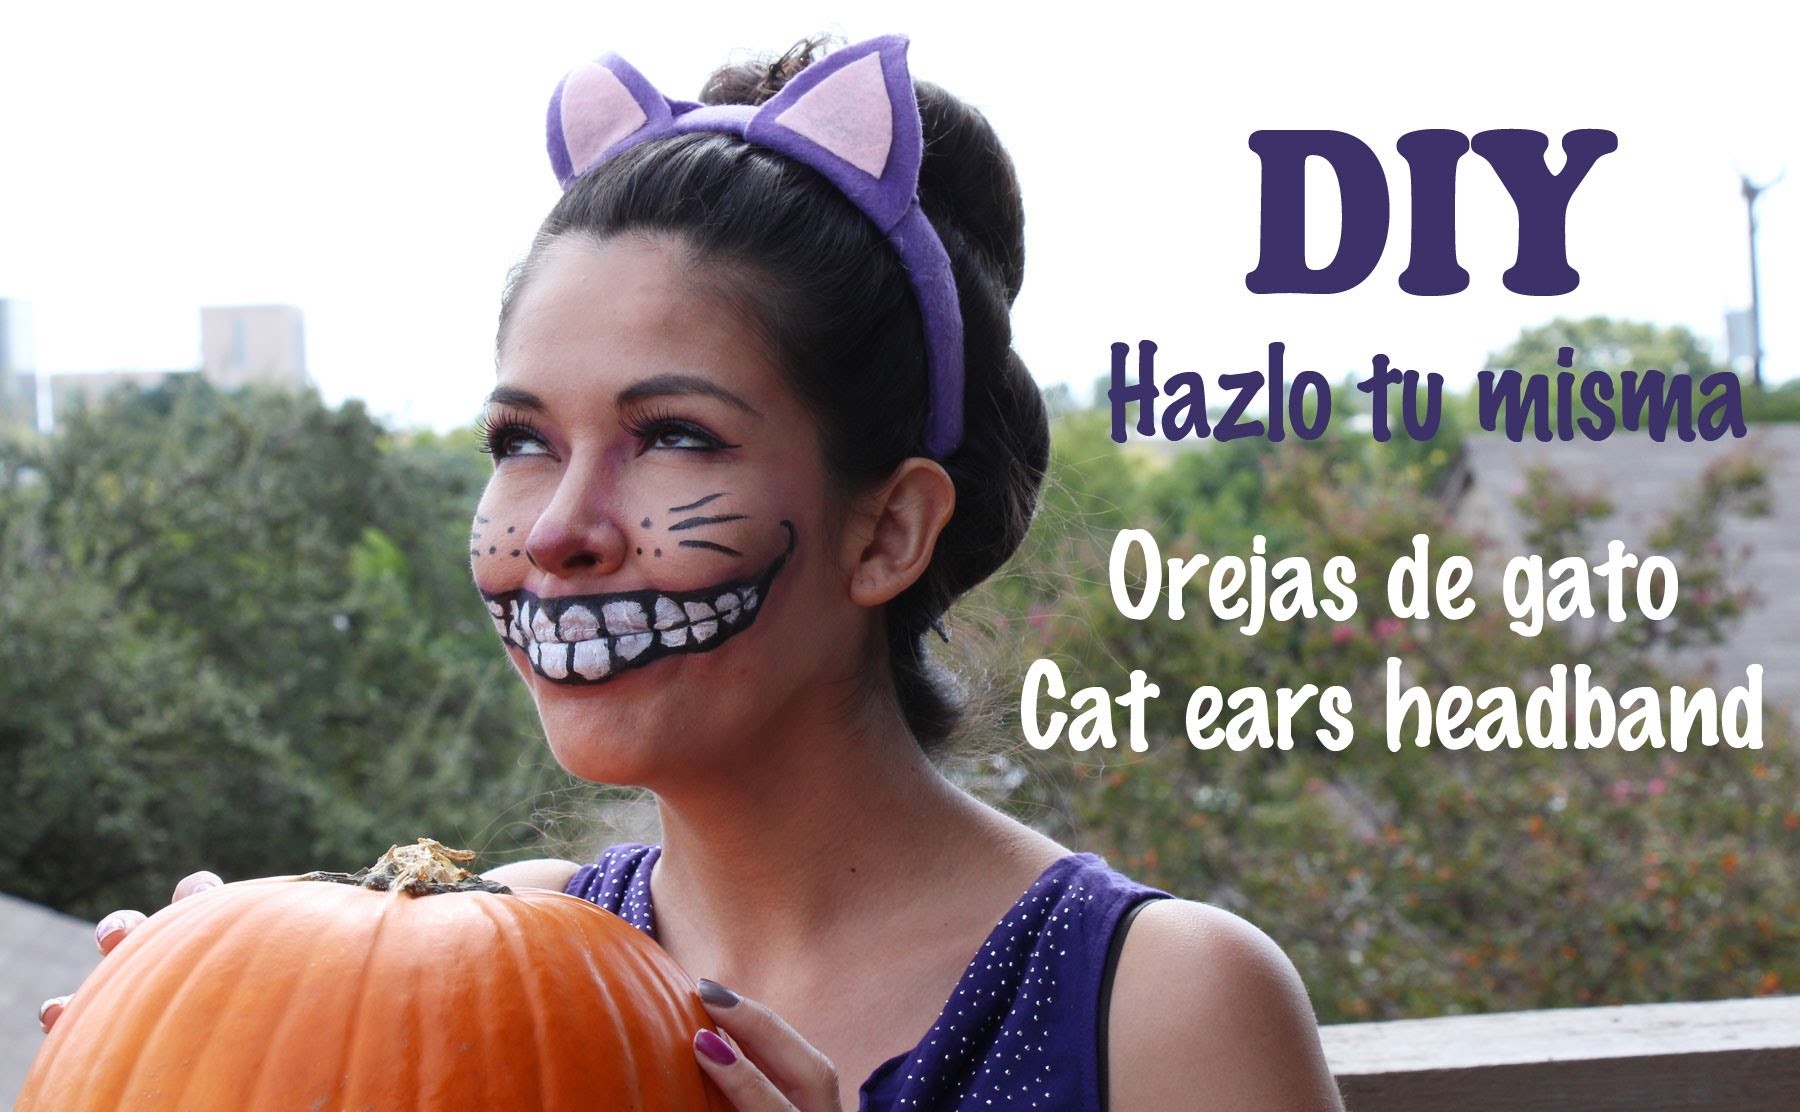 DIY Cheshire cat ears headband. Hazlo tu misma orejas de gato